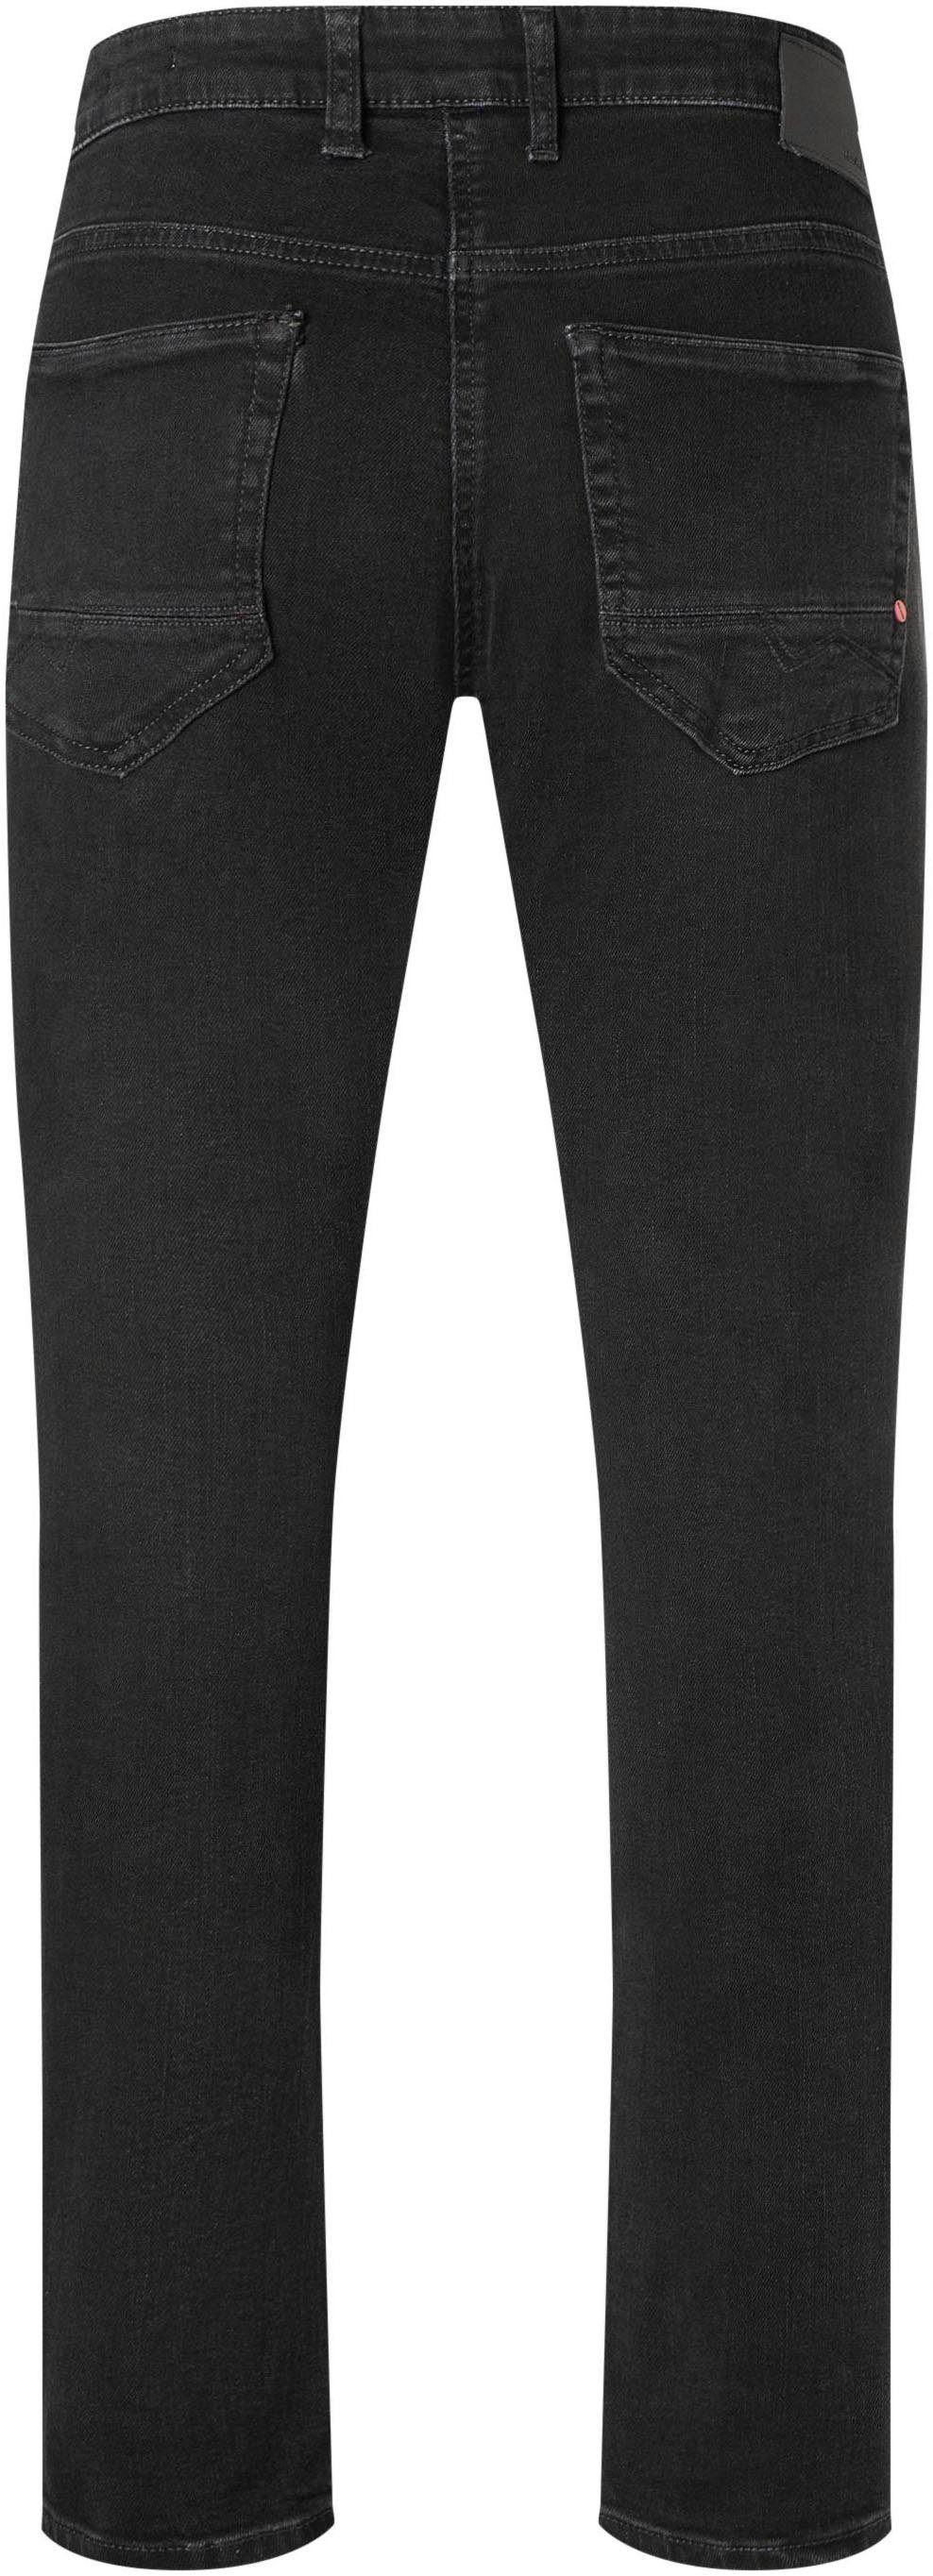 Arne wash Straight-Jeans MAC Pipe black